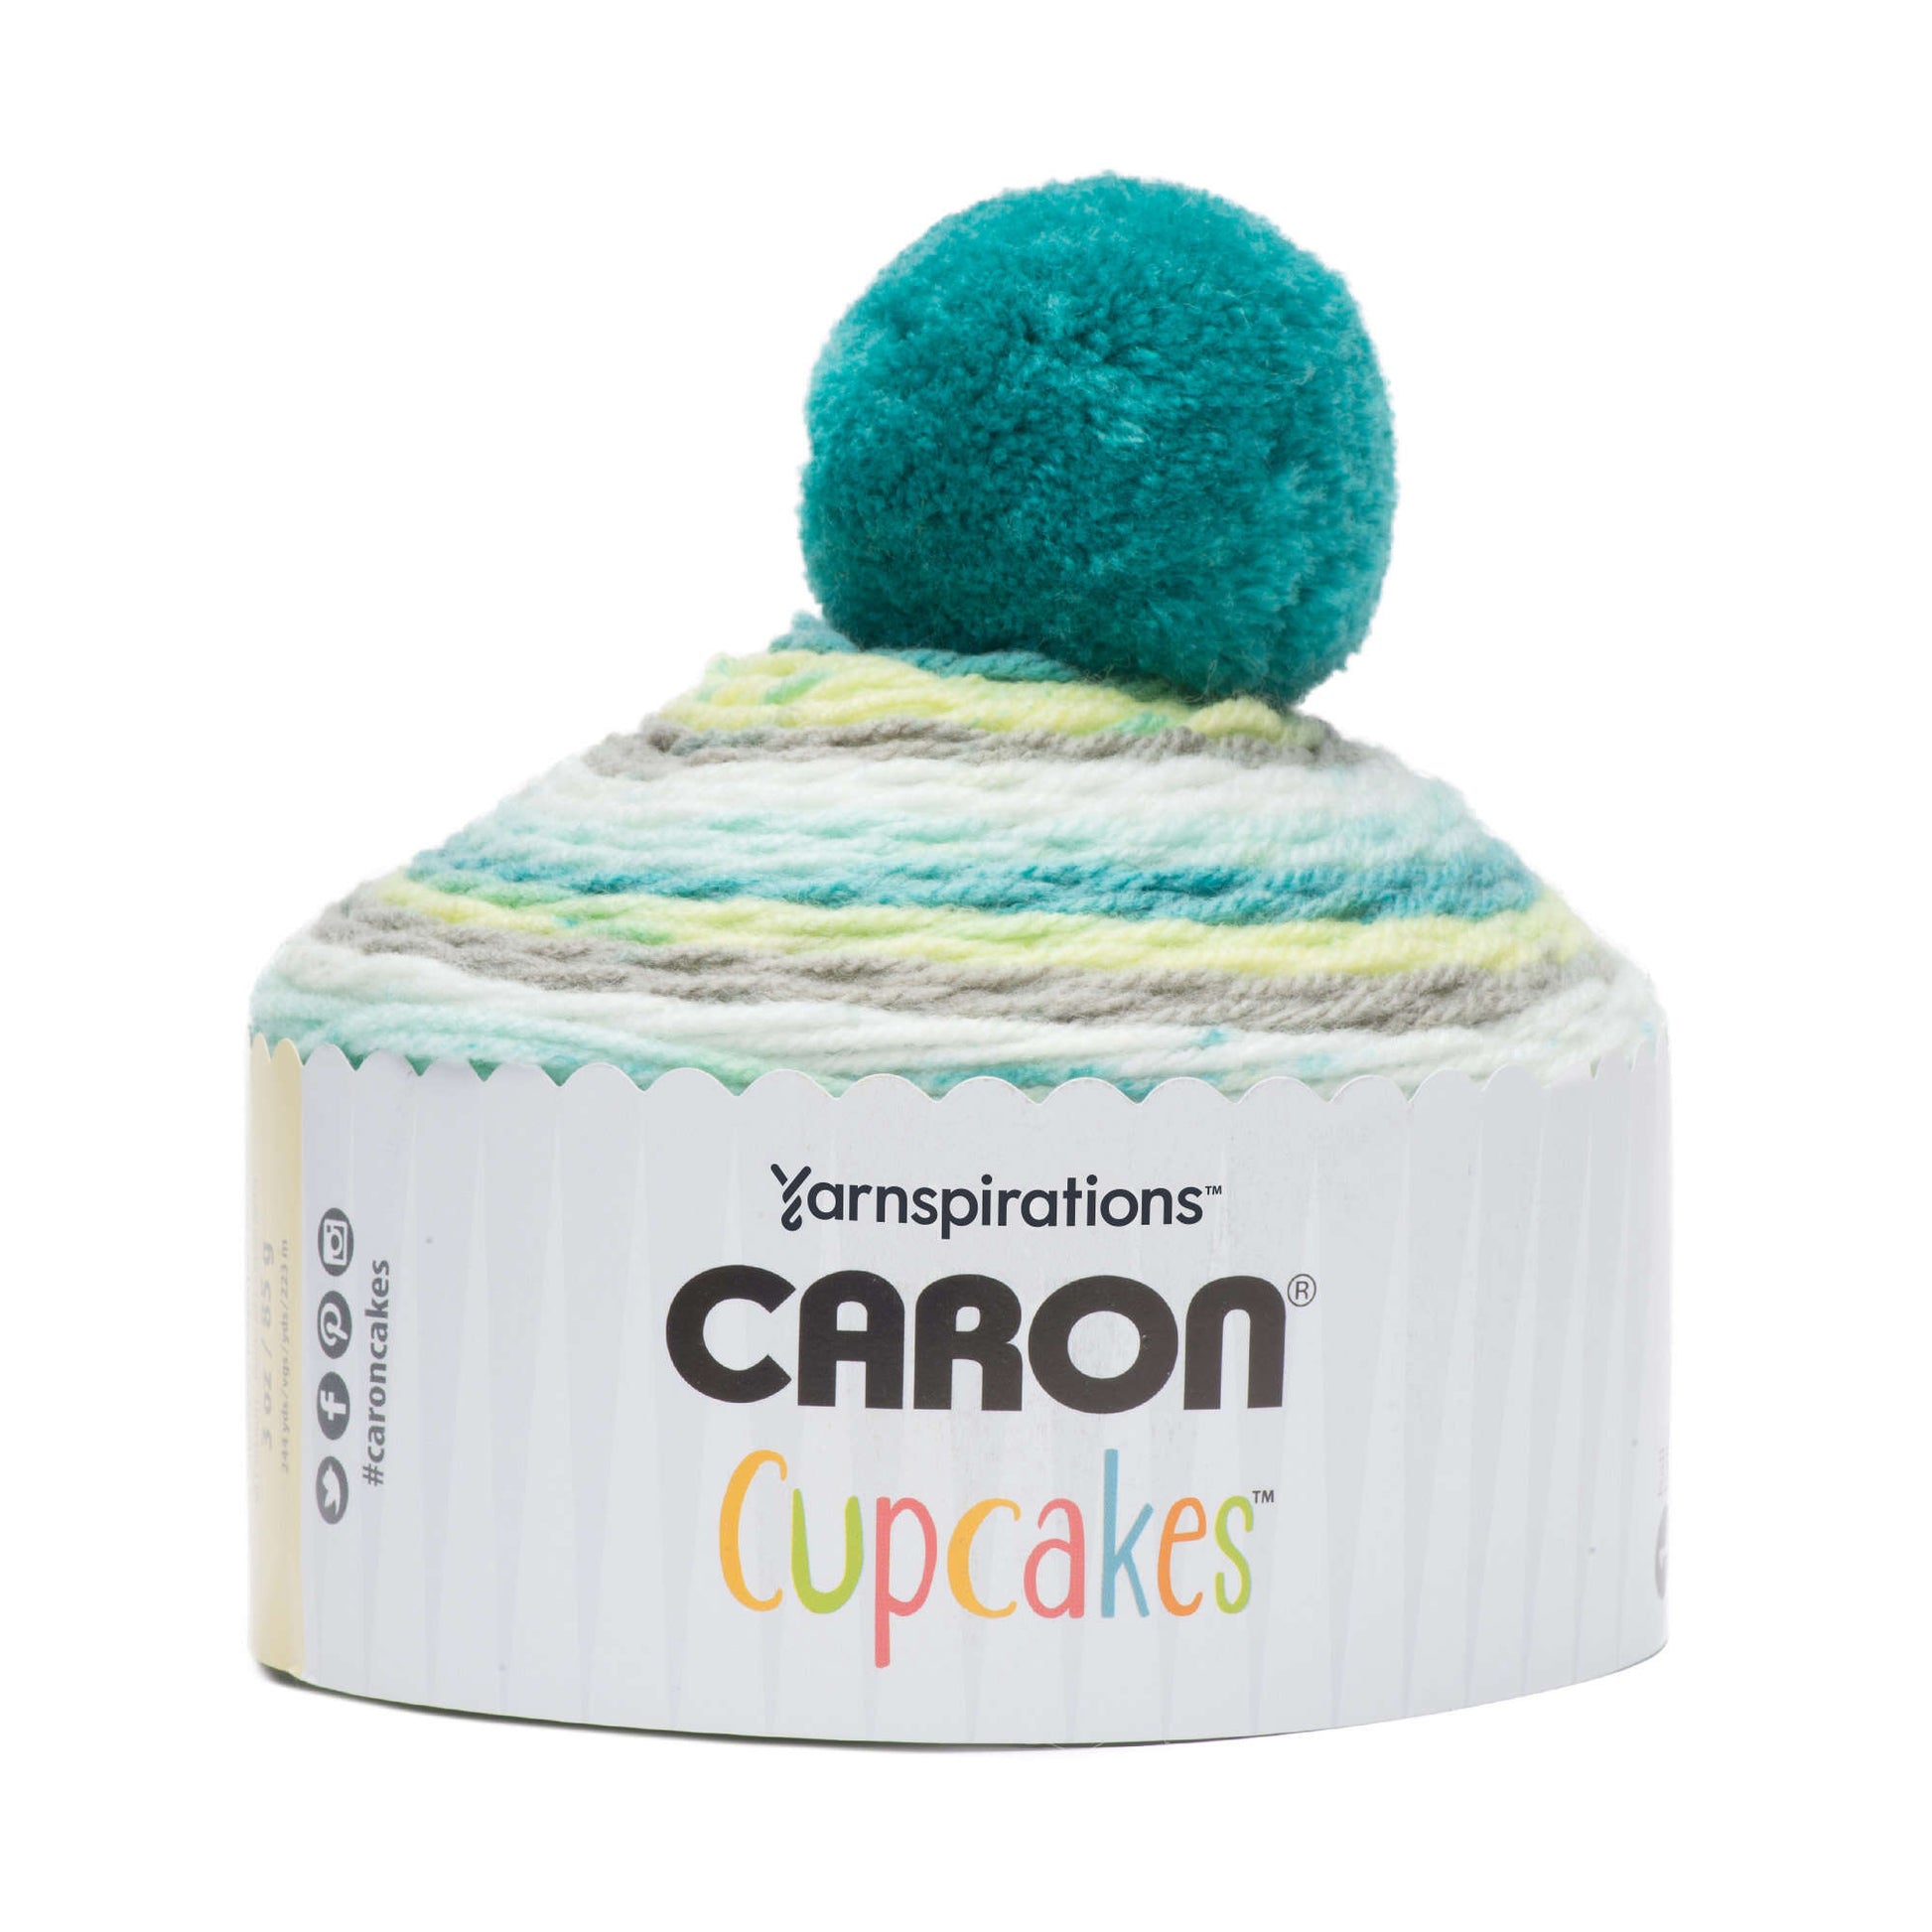 Caron Cupcakes Yarn - Discontinued Shades Caribbean Coconut